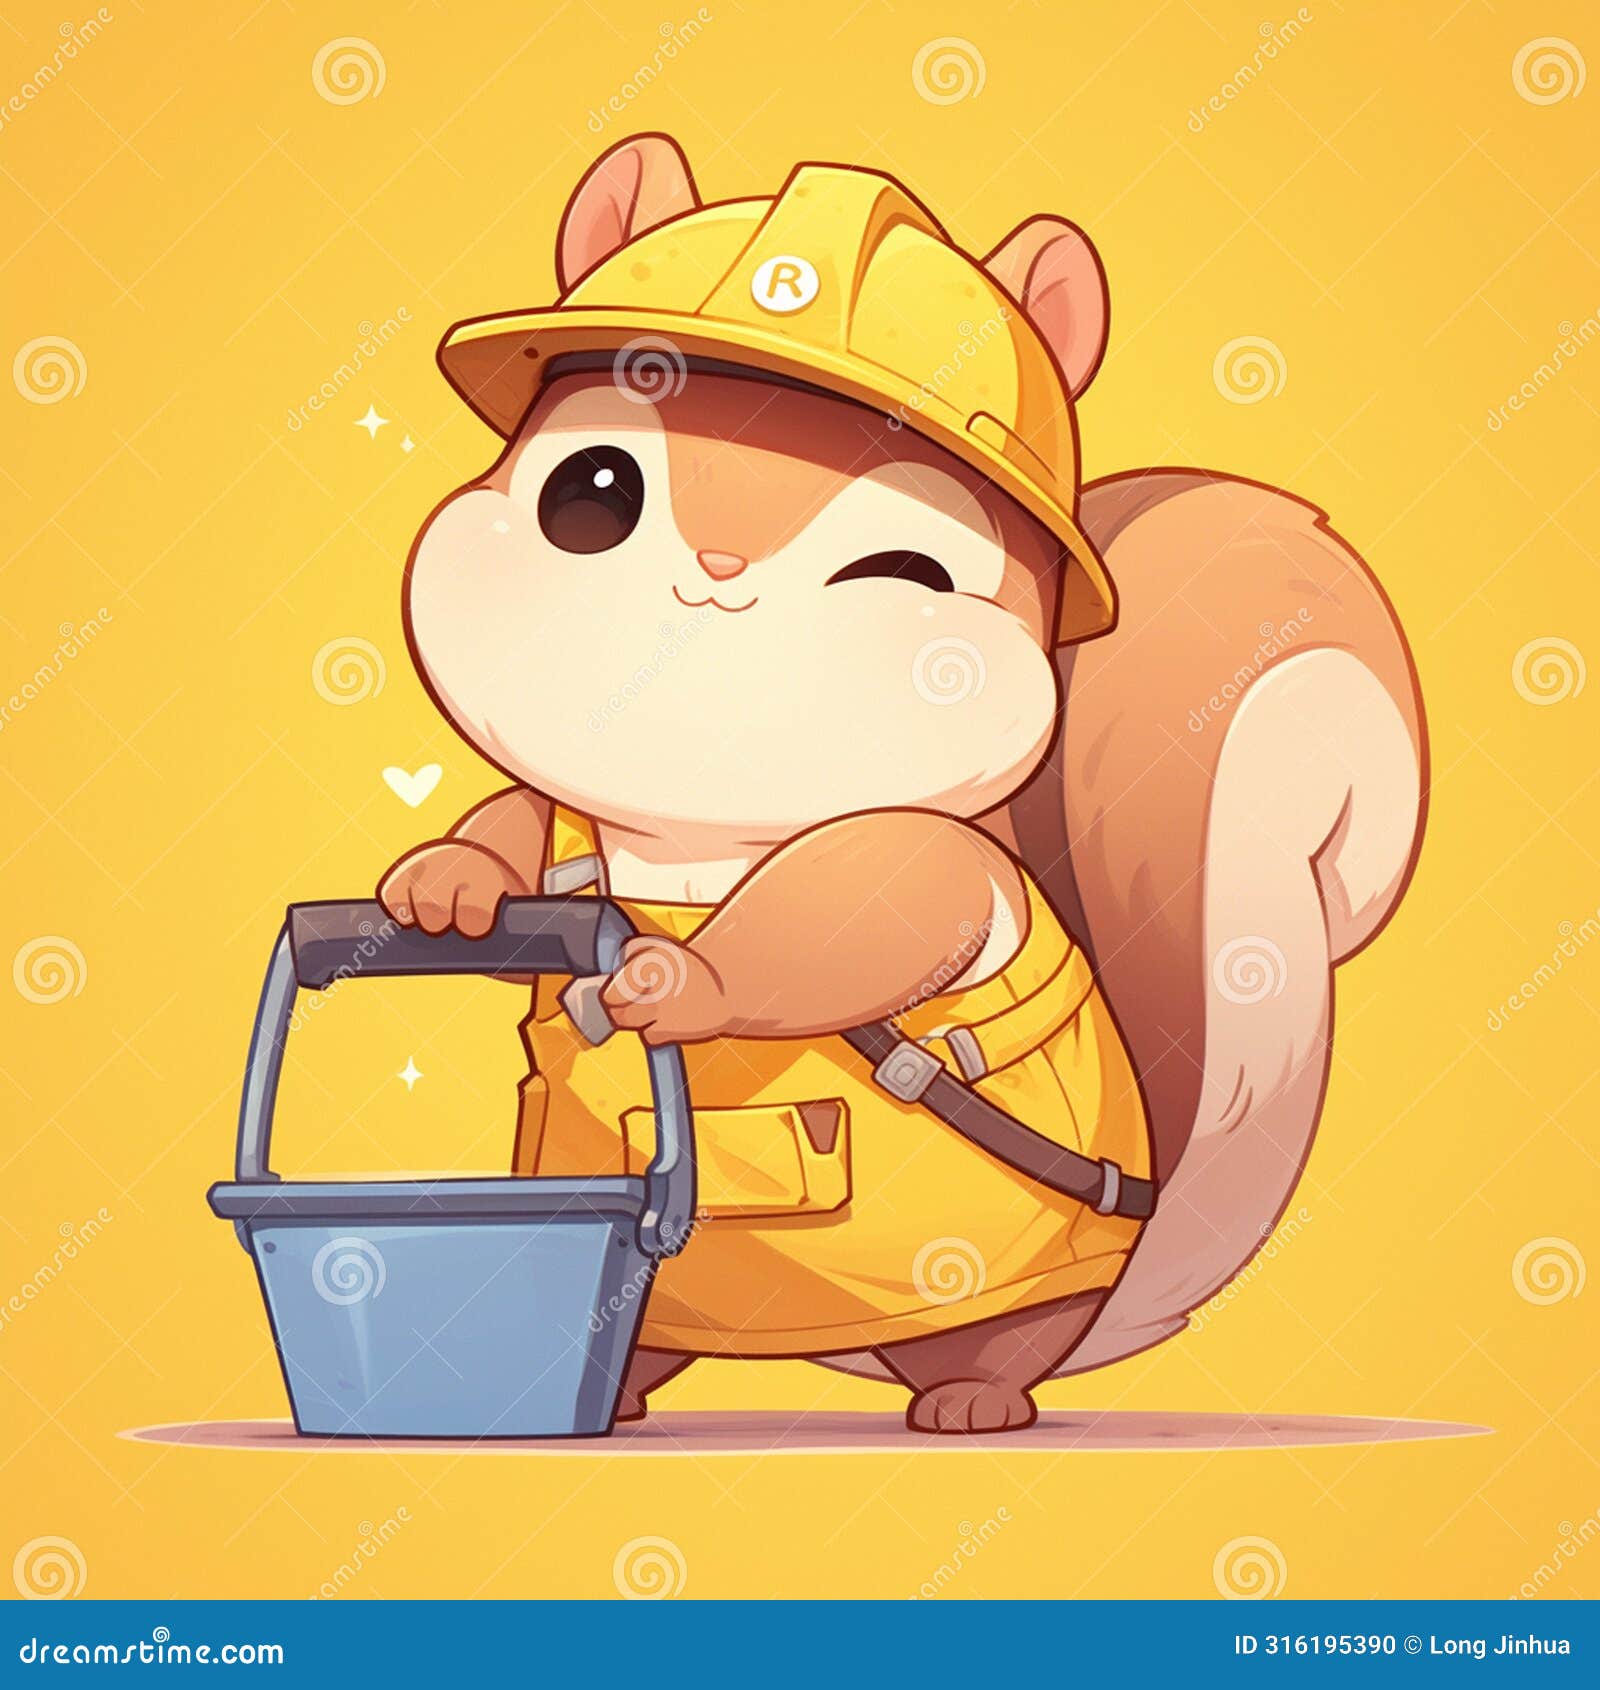 a nimble squirrel sanitation worker cartoon style